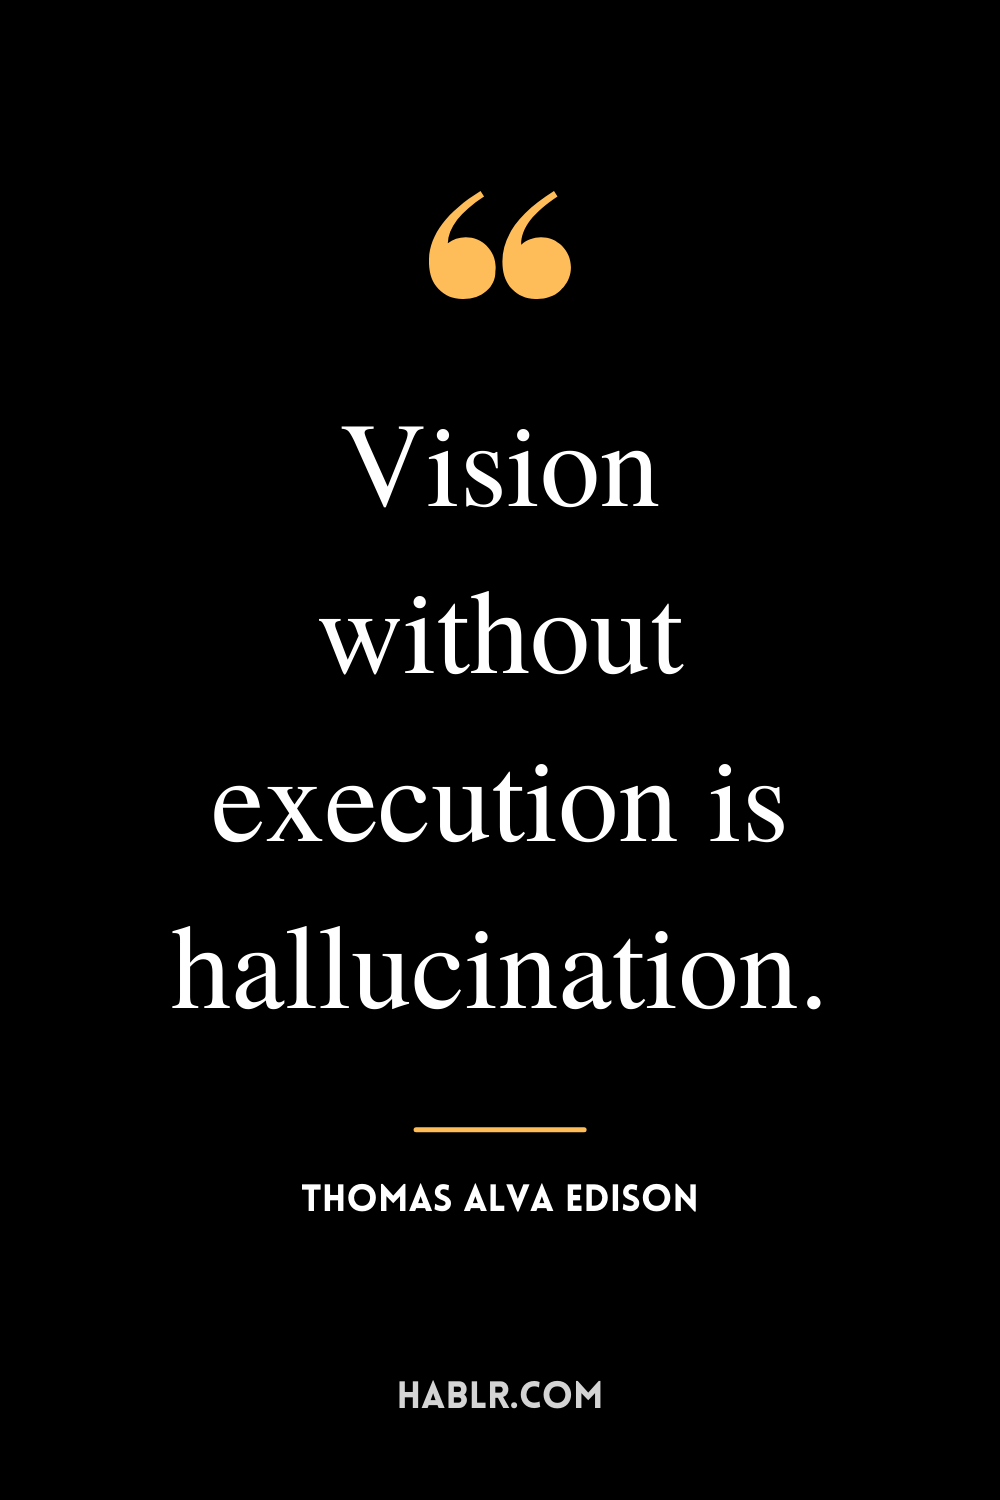 “Vision without execution is hallucination.” -Thomas Alva Edison